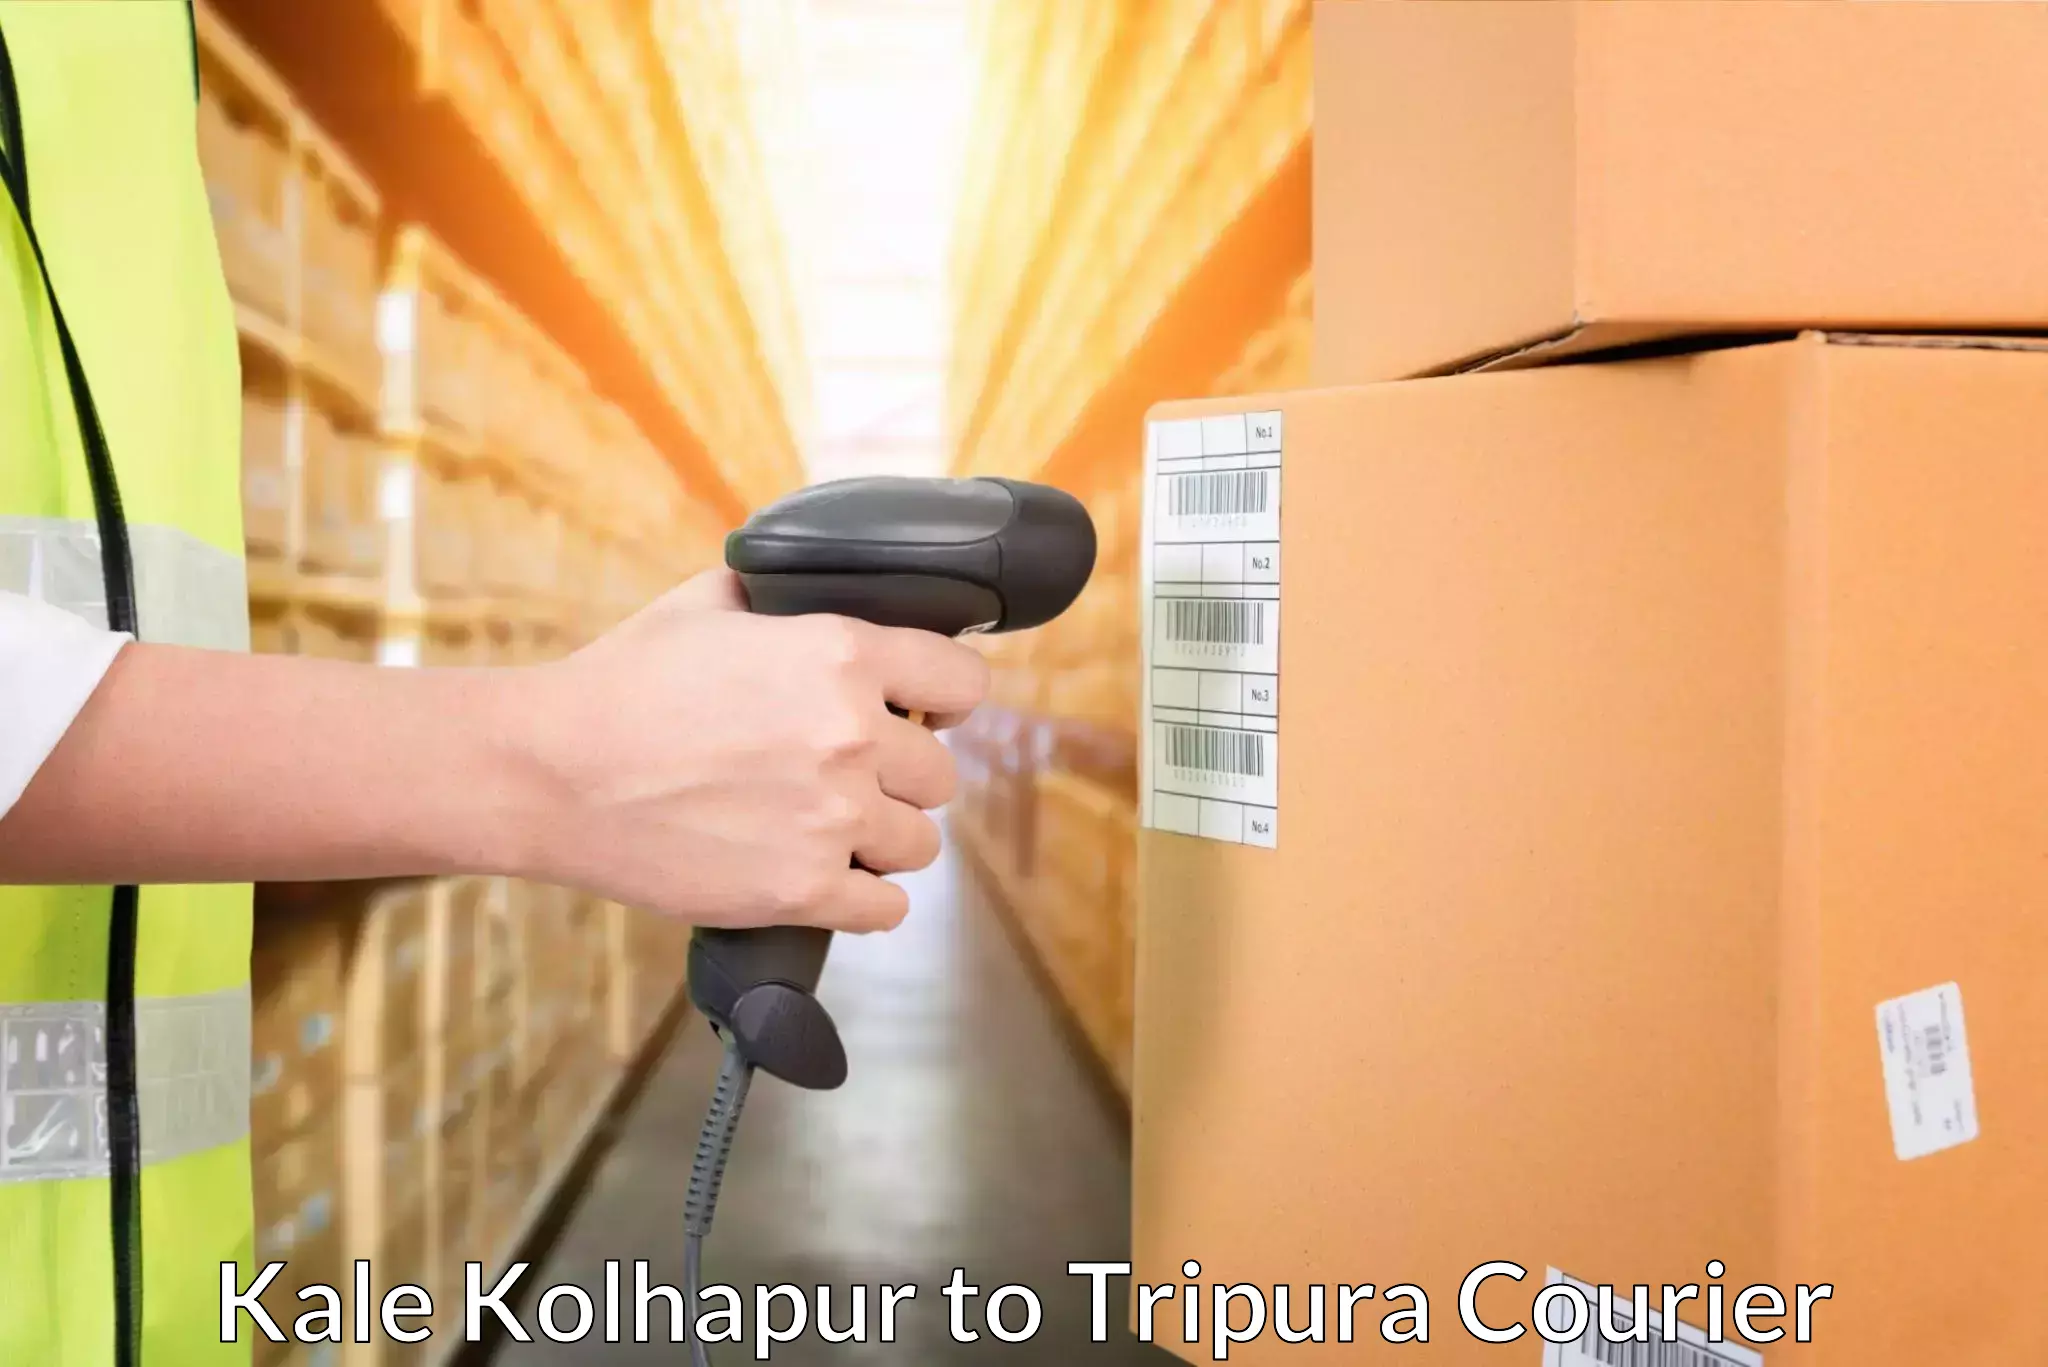 Courier service efficiency Kale Kolhapur to Tripura